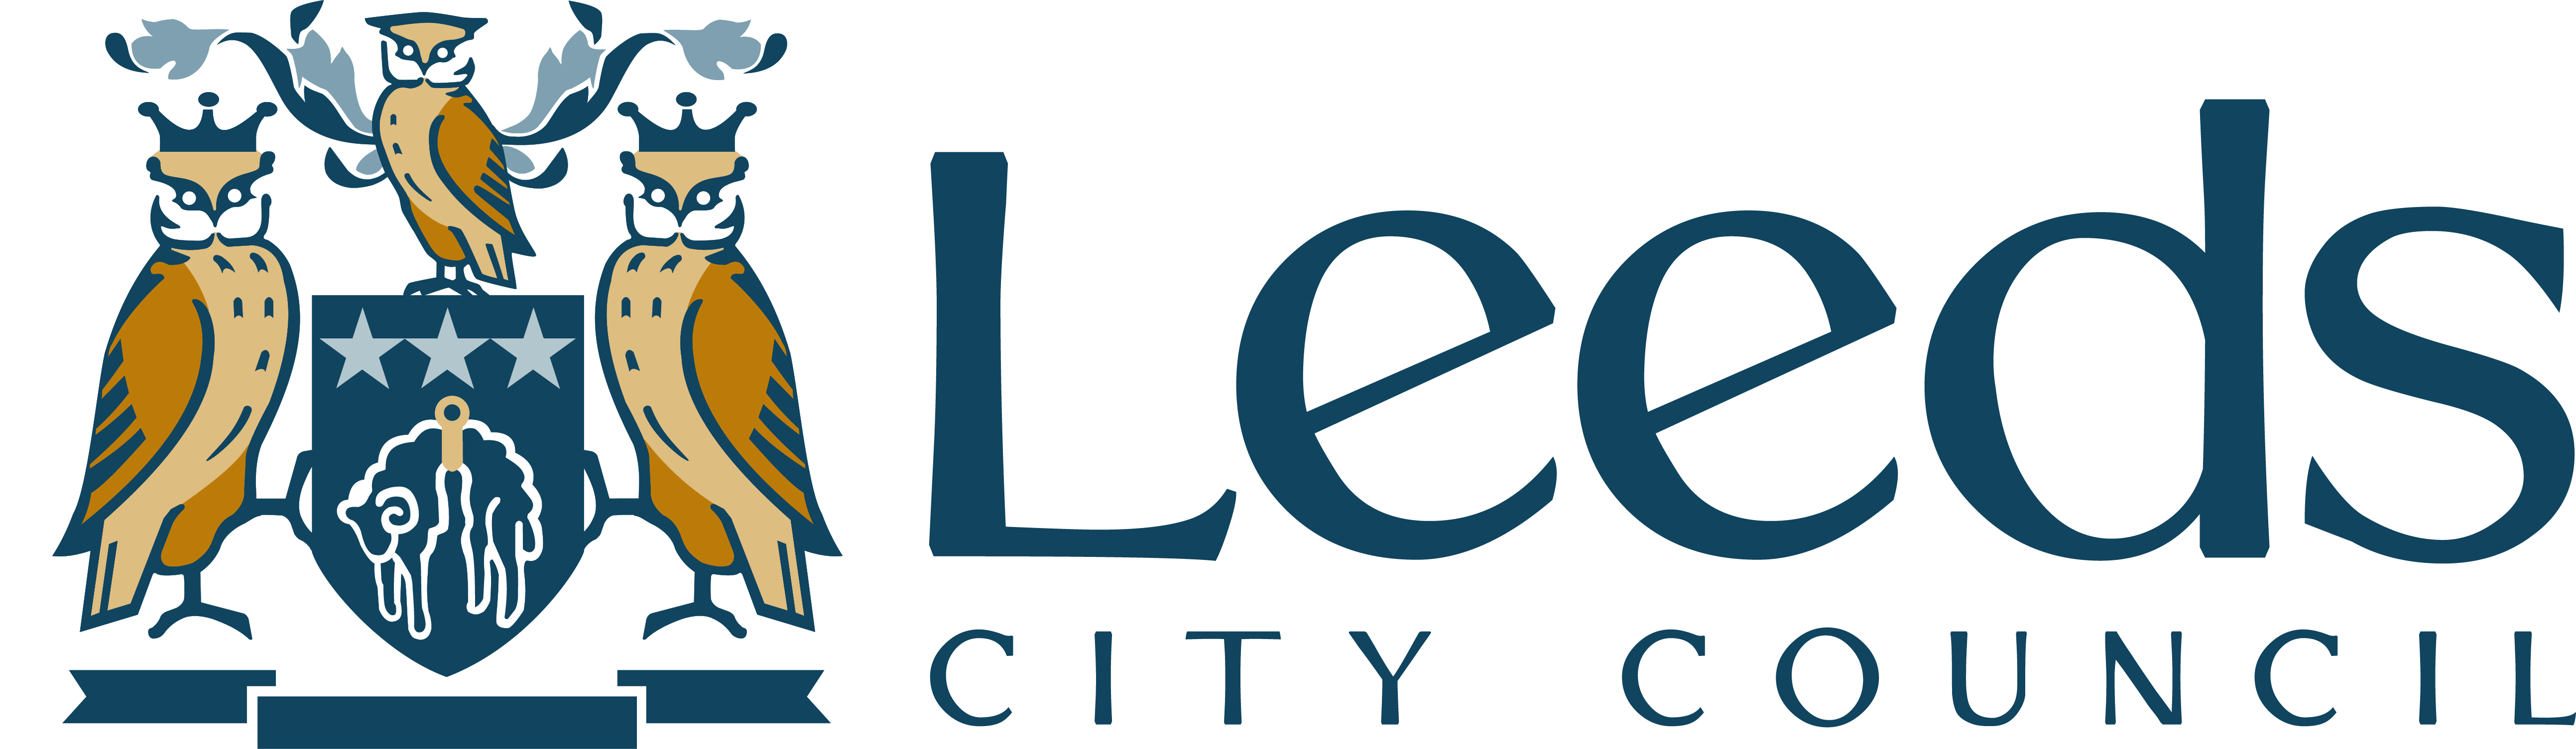 Leeds Logo - Leeds-City-Council-logo | Digital Leaders